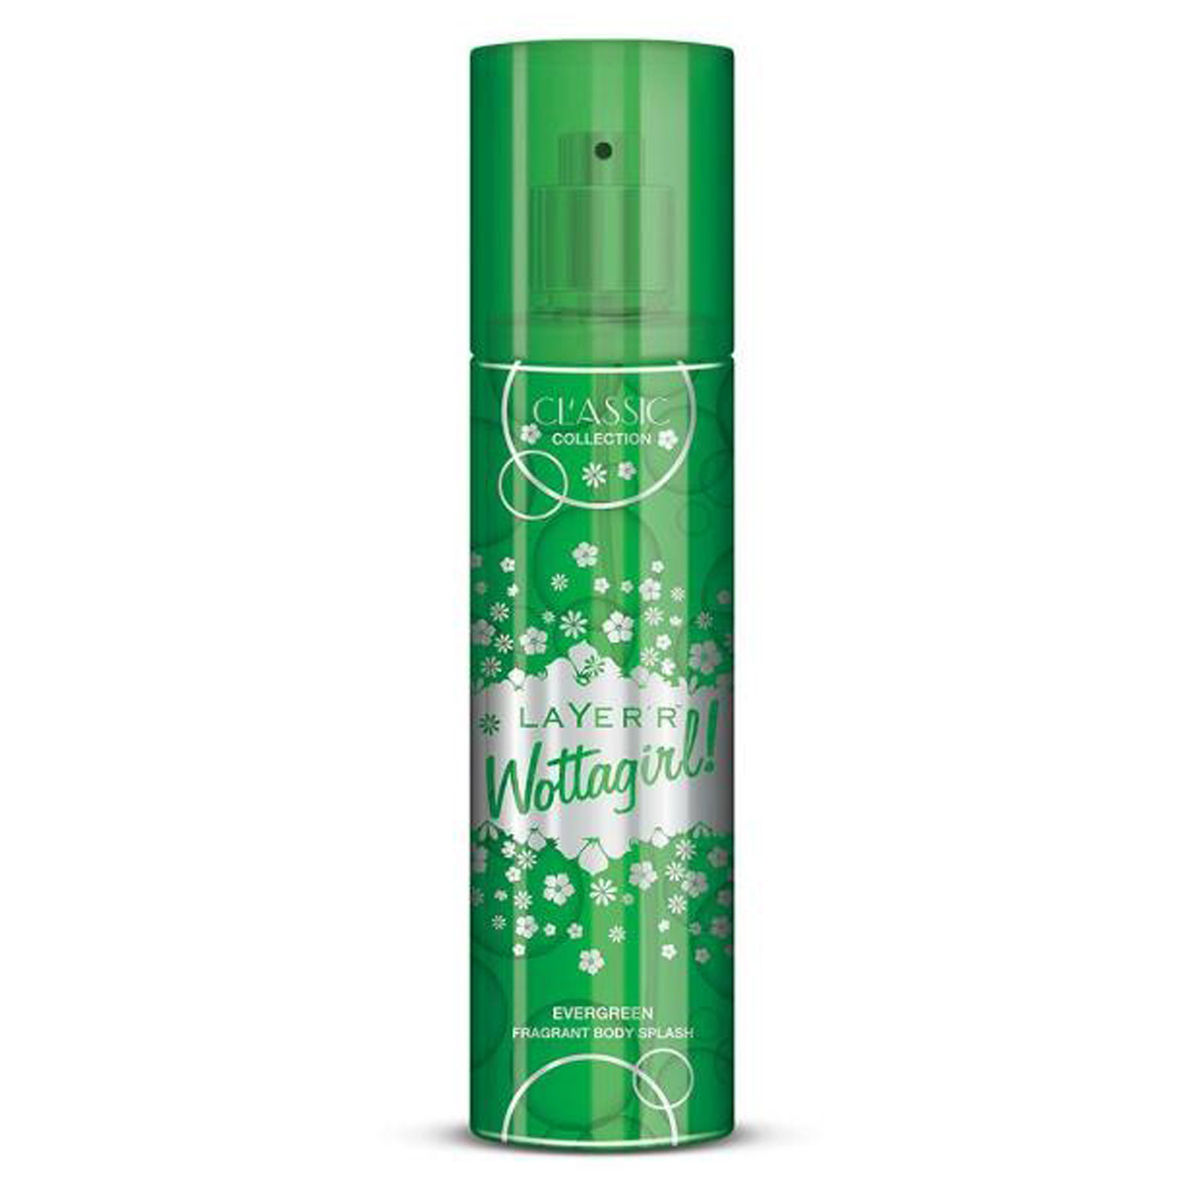 Buy Layer'r Wottagirl Evergreen Fragrant Body Spray, 135 ml Online